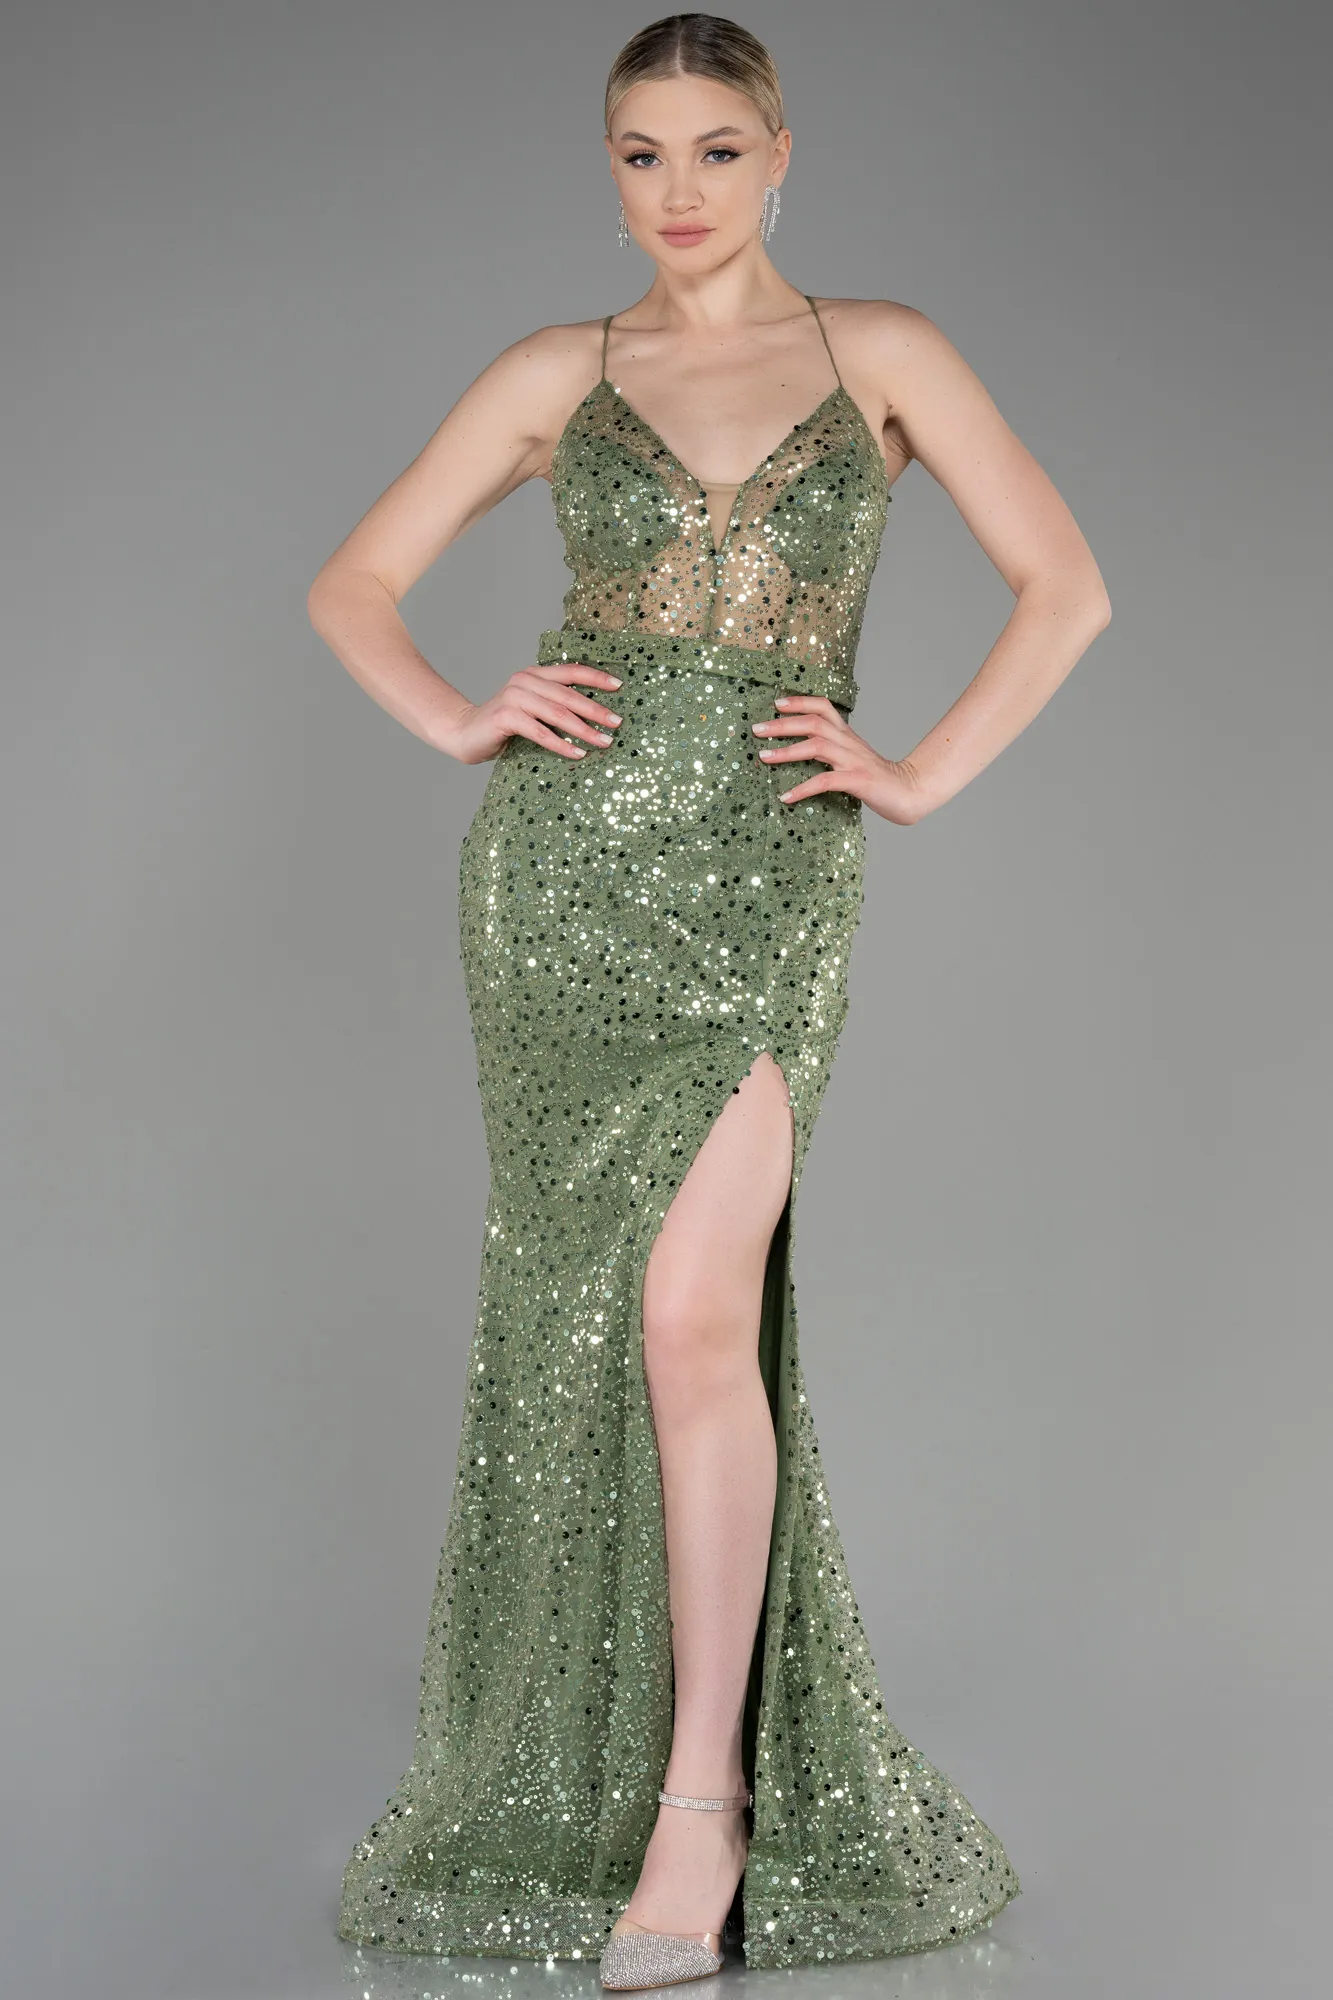 Olive Drab-Long Scaly Mermaid Prom Dress ABU3561